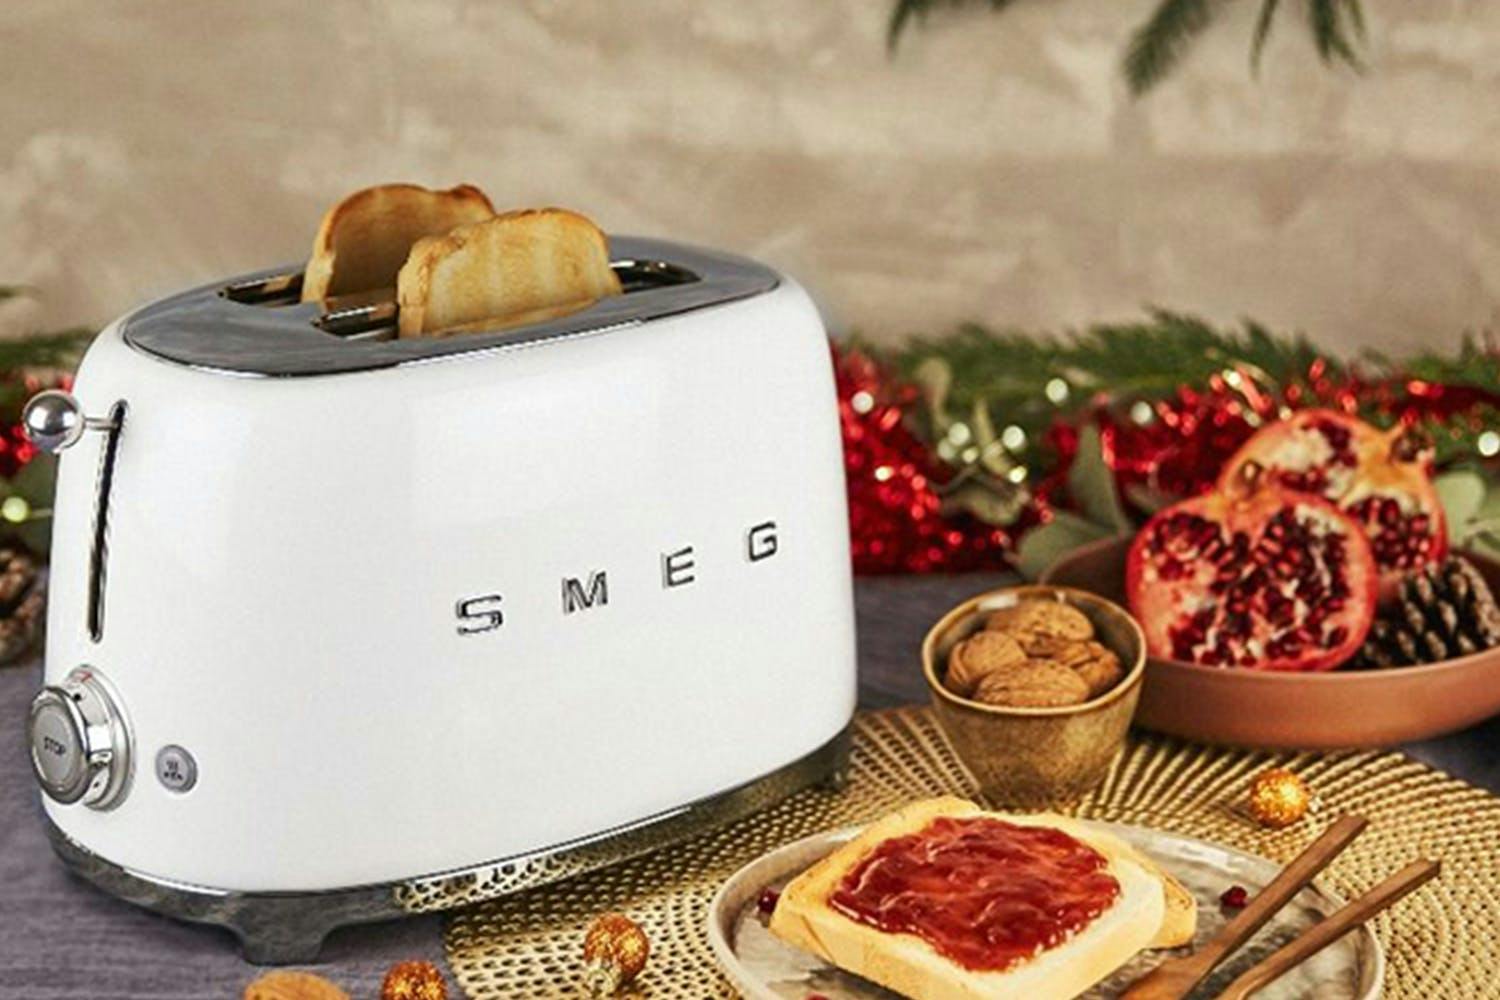 Smeg 50's Retro Style Aesthetic 2 Slice Toaster | TSF01WHUK | White